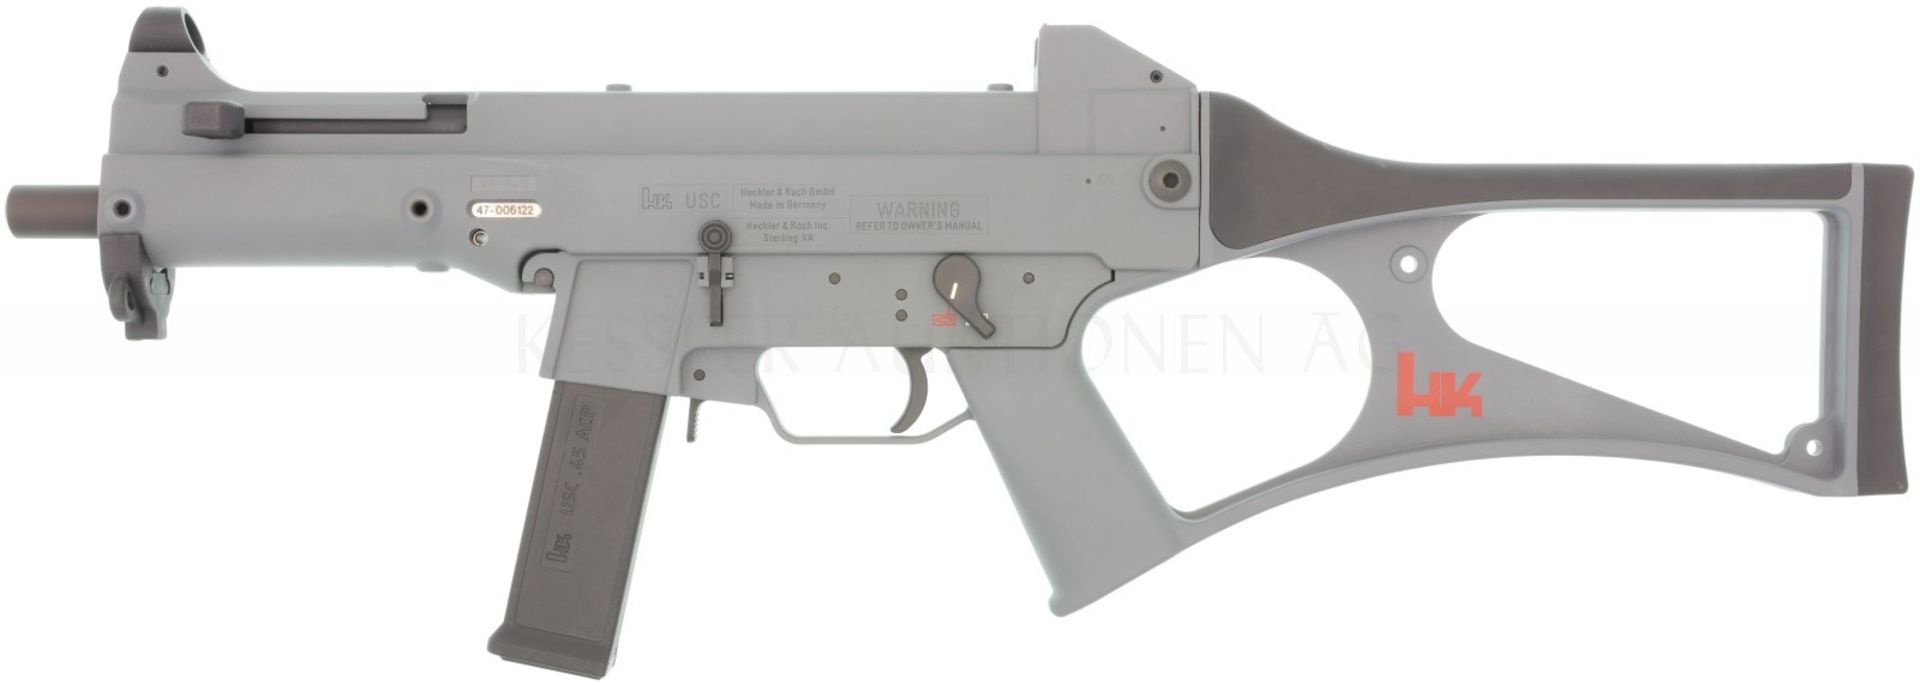 Selbstladebüchse HK USC, Kal. .45ACP. Zuverlässiger Rückstoßlader, System basiert auf der HK UMP. LL